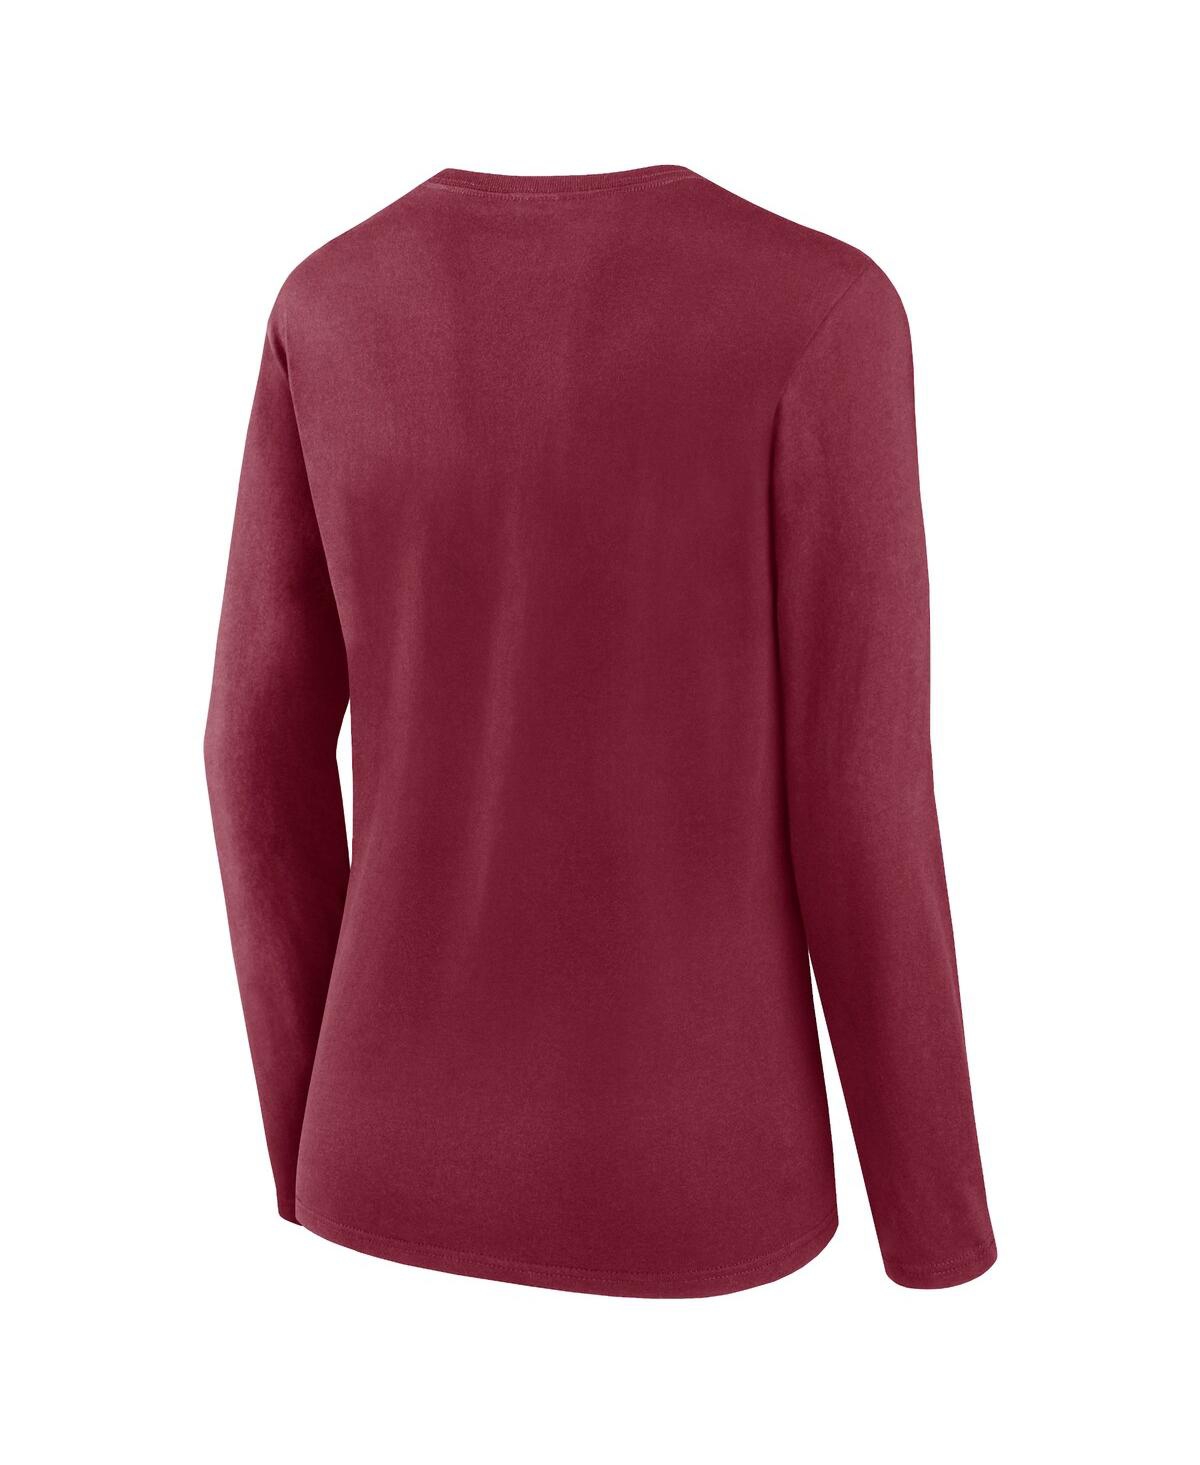 Shop Fanatics Women's  Burgundy Washington Commanders Plus Size Foiled Play Long Sleeve T-shirt